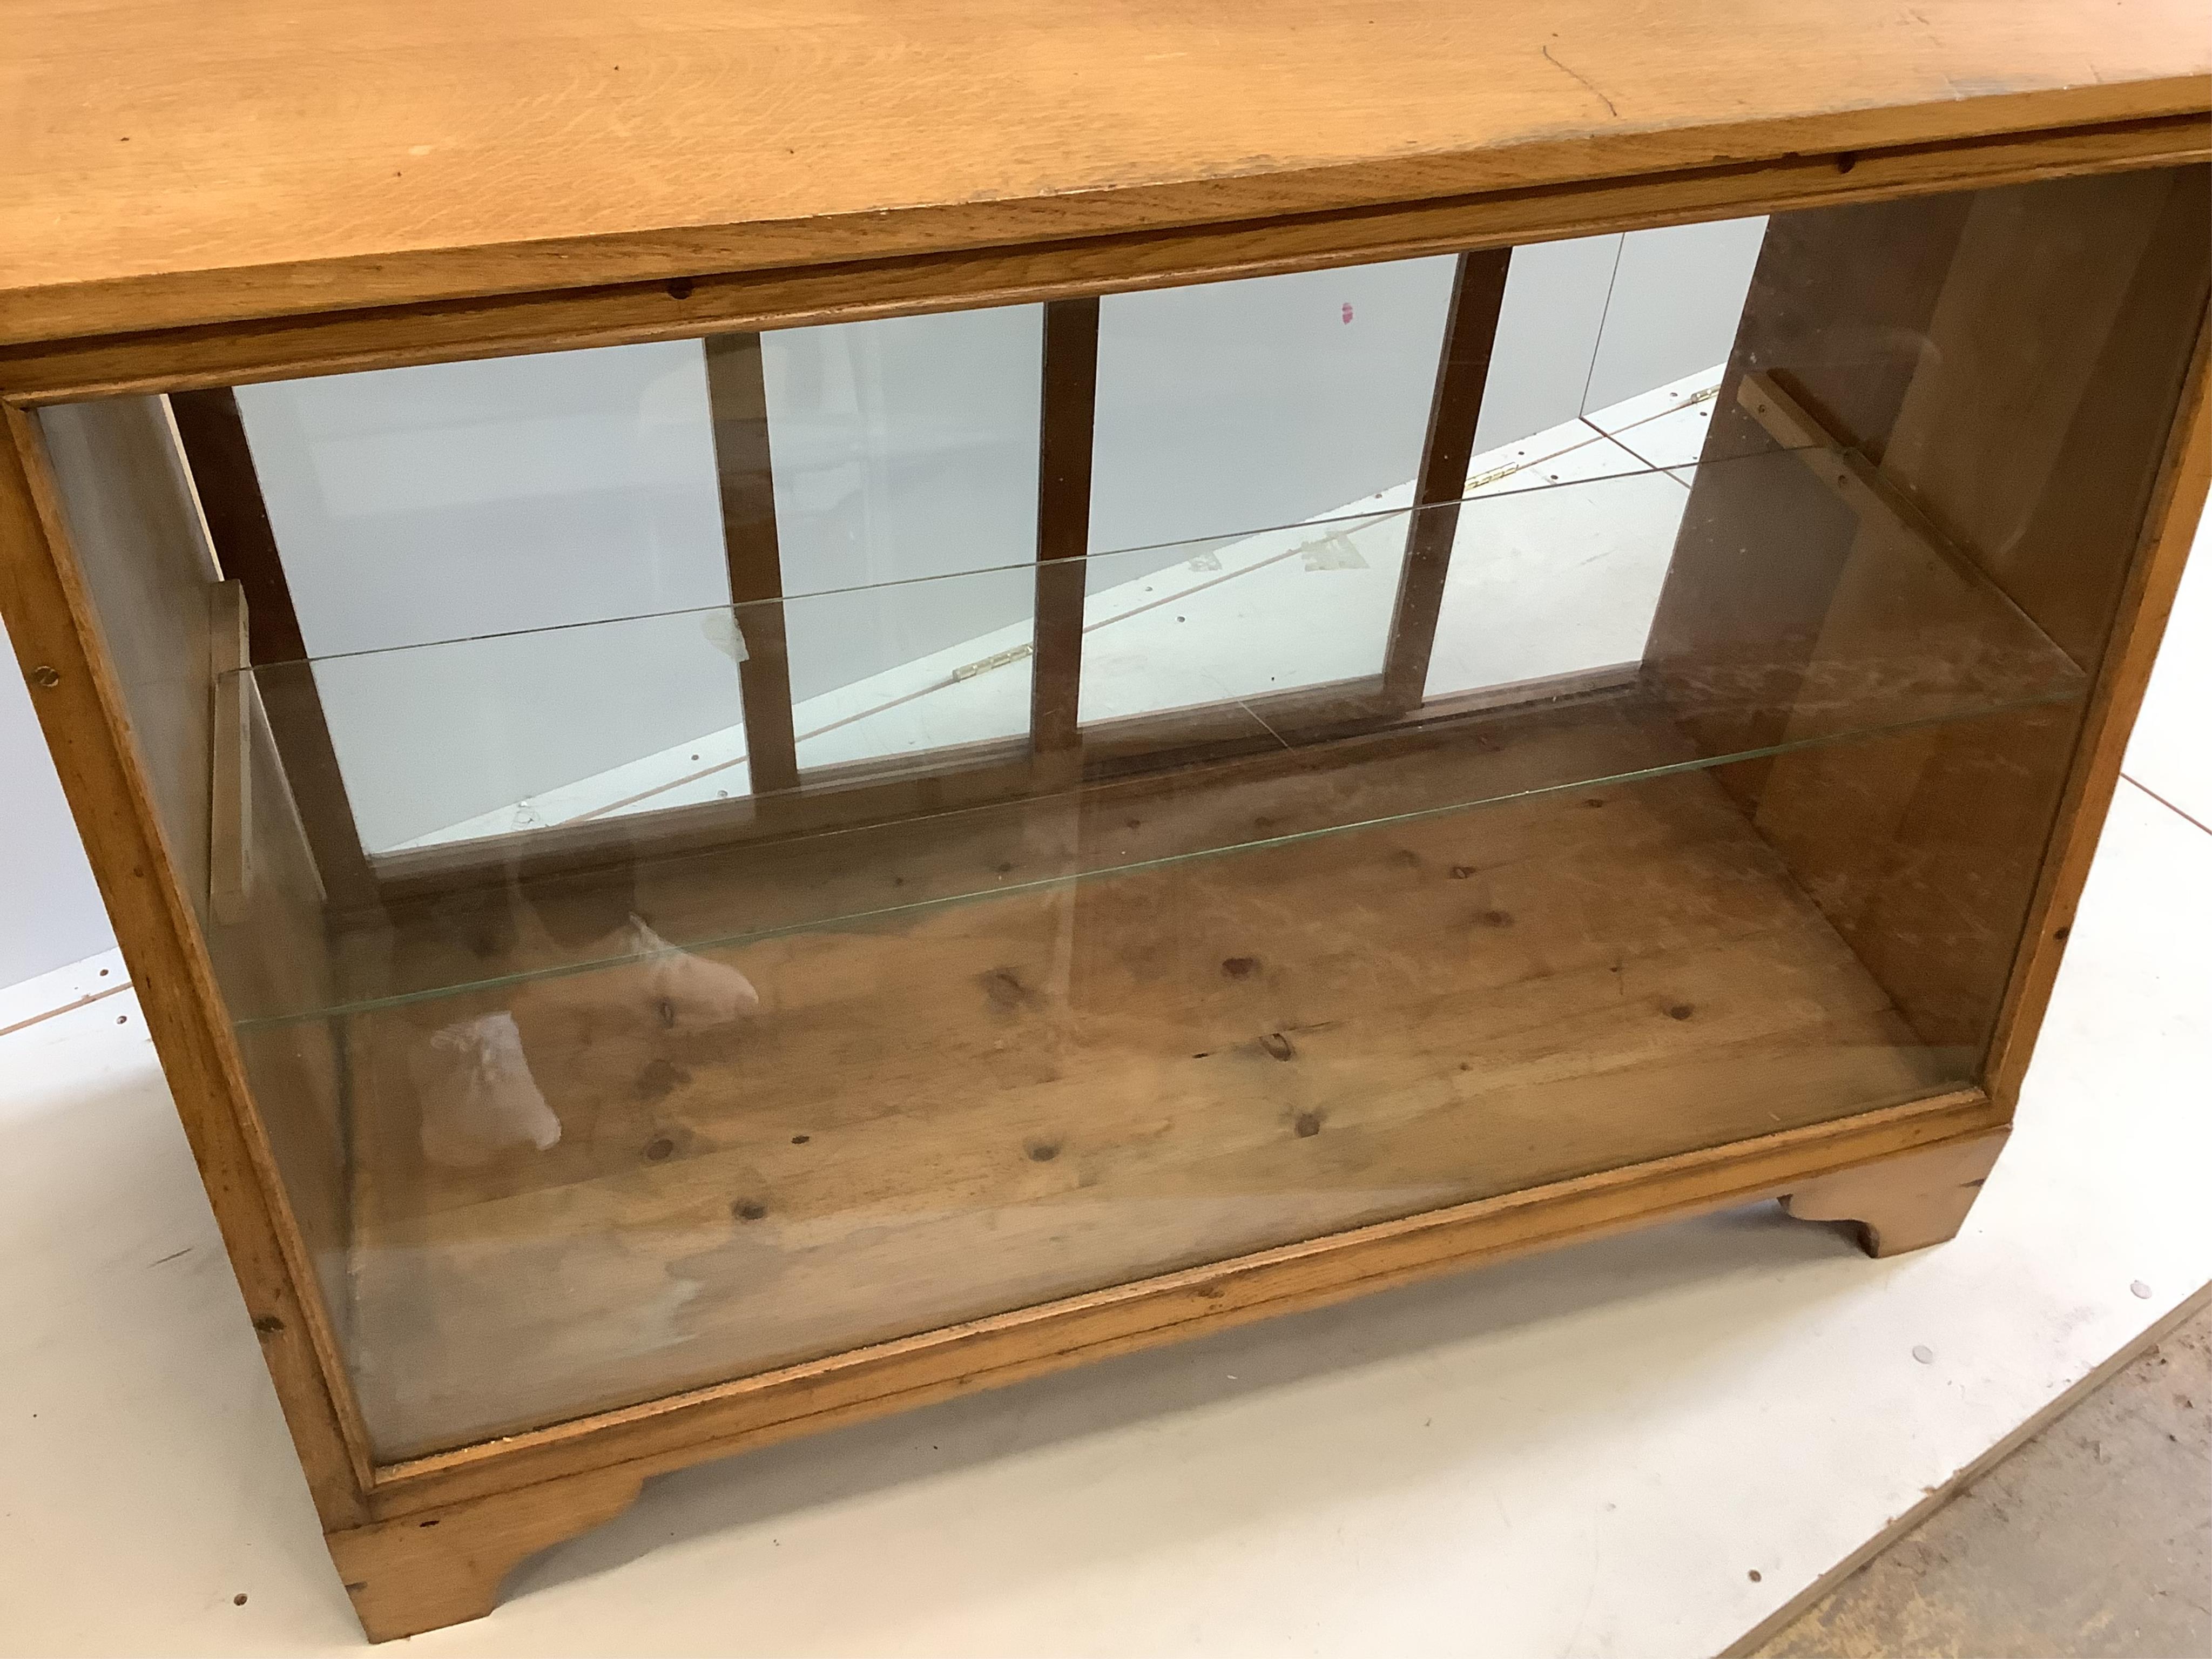 A mid century glazed oak haberdasher's cabinet, width 124cm, depth 56cm, height 90cm. Condition - fair